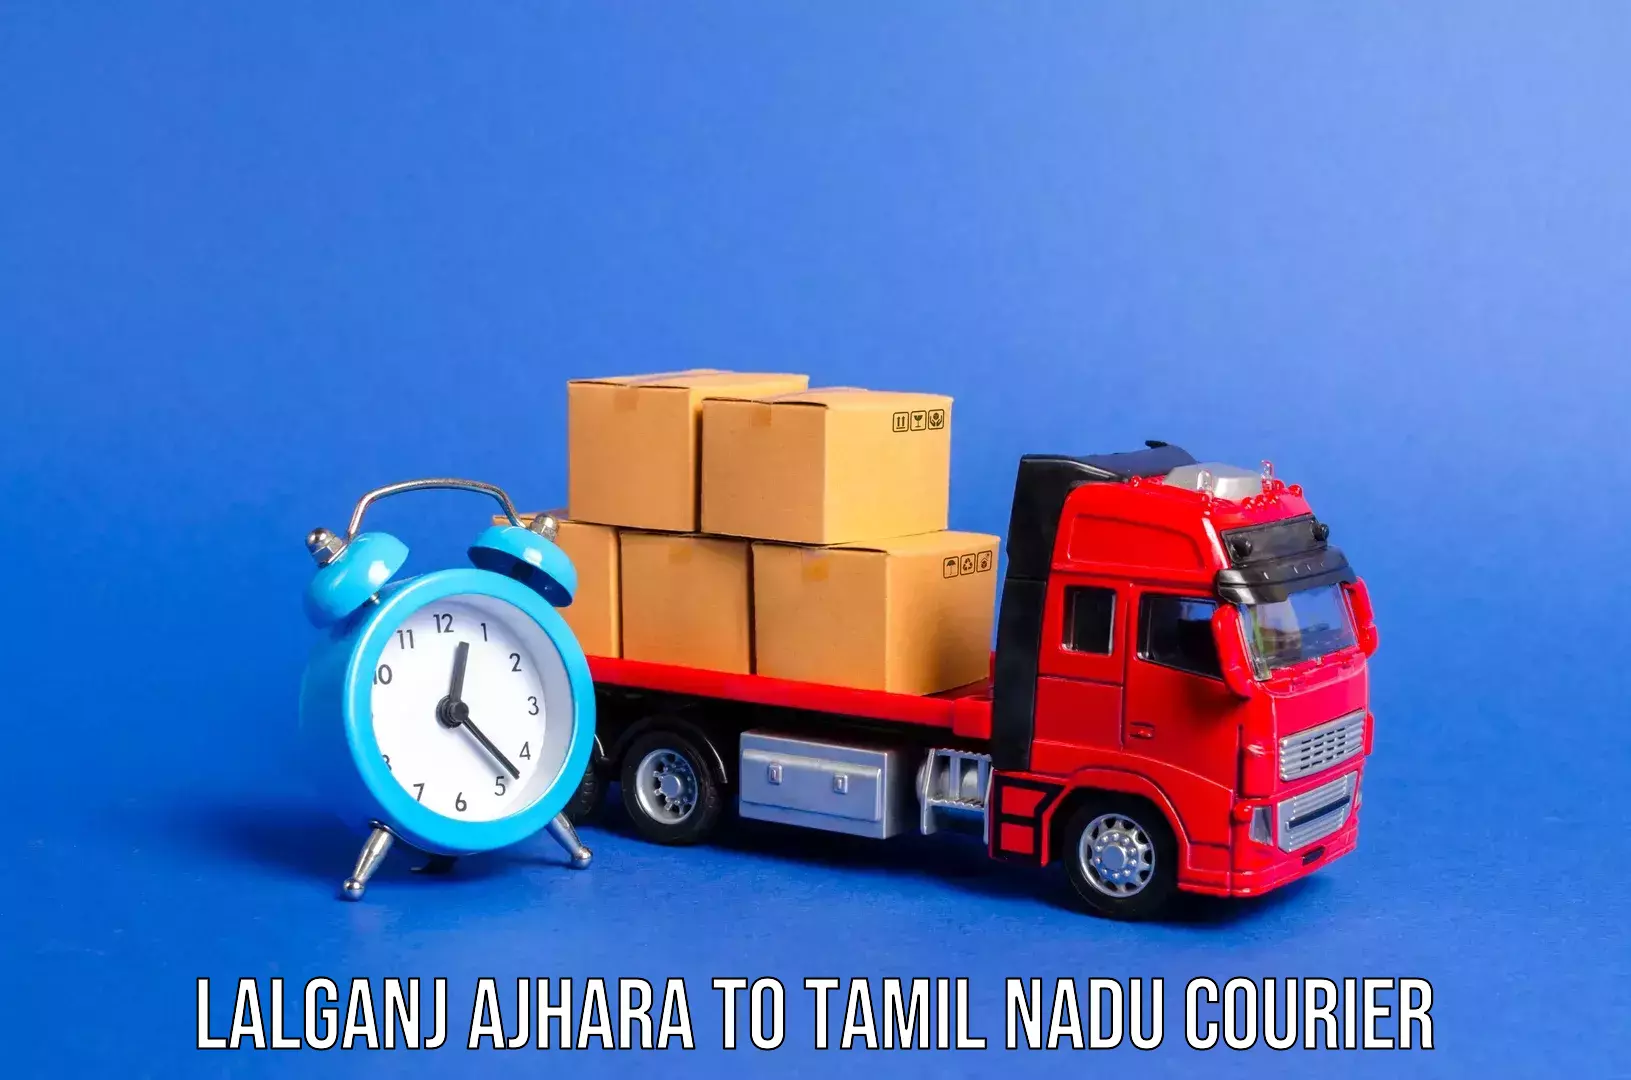 Luggage shipment specialists Lalganj Ajhara to Tamil Nadu